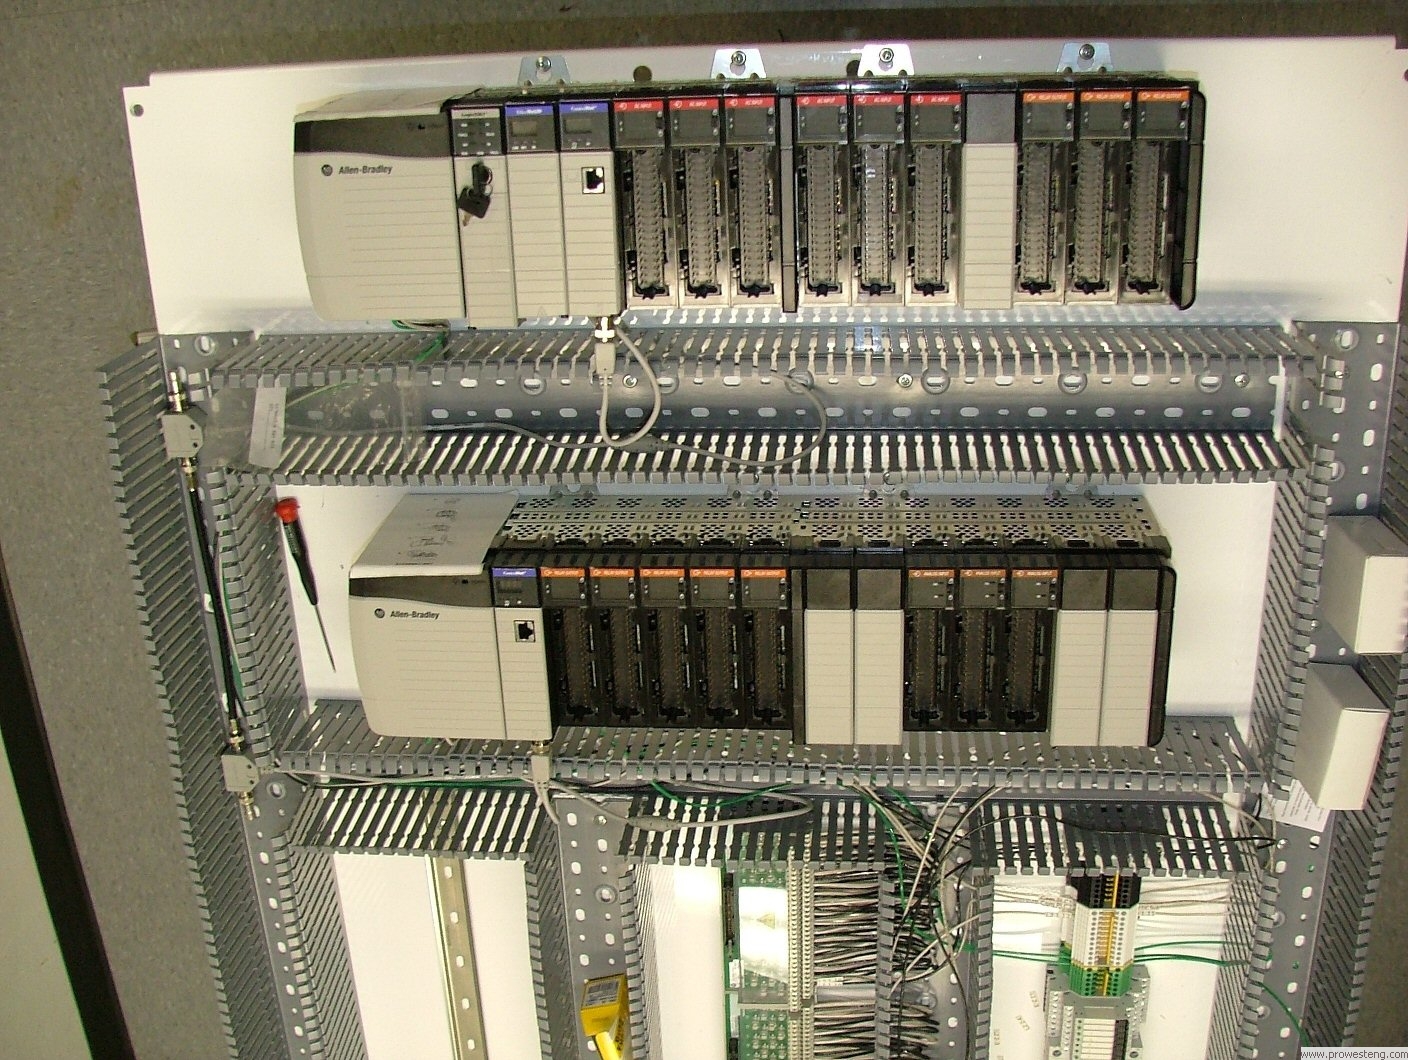 Allen Bradley ControlLogix PLC with wiring interface modules.